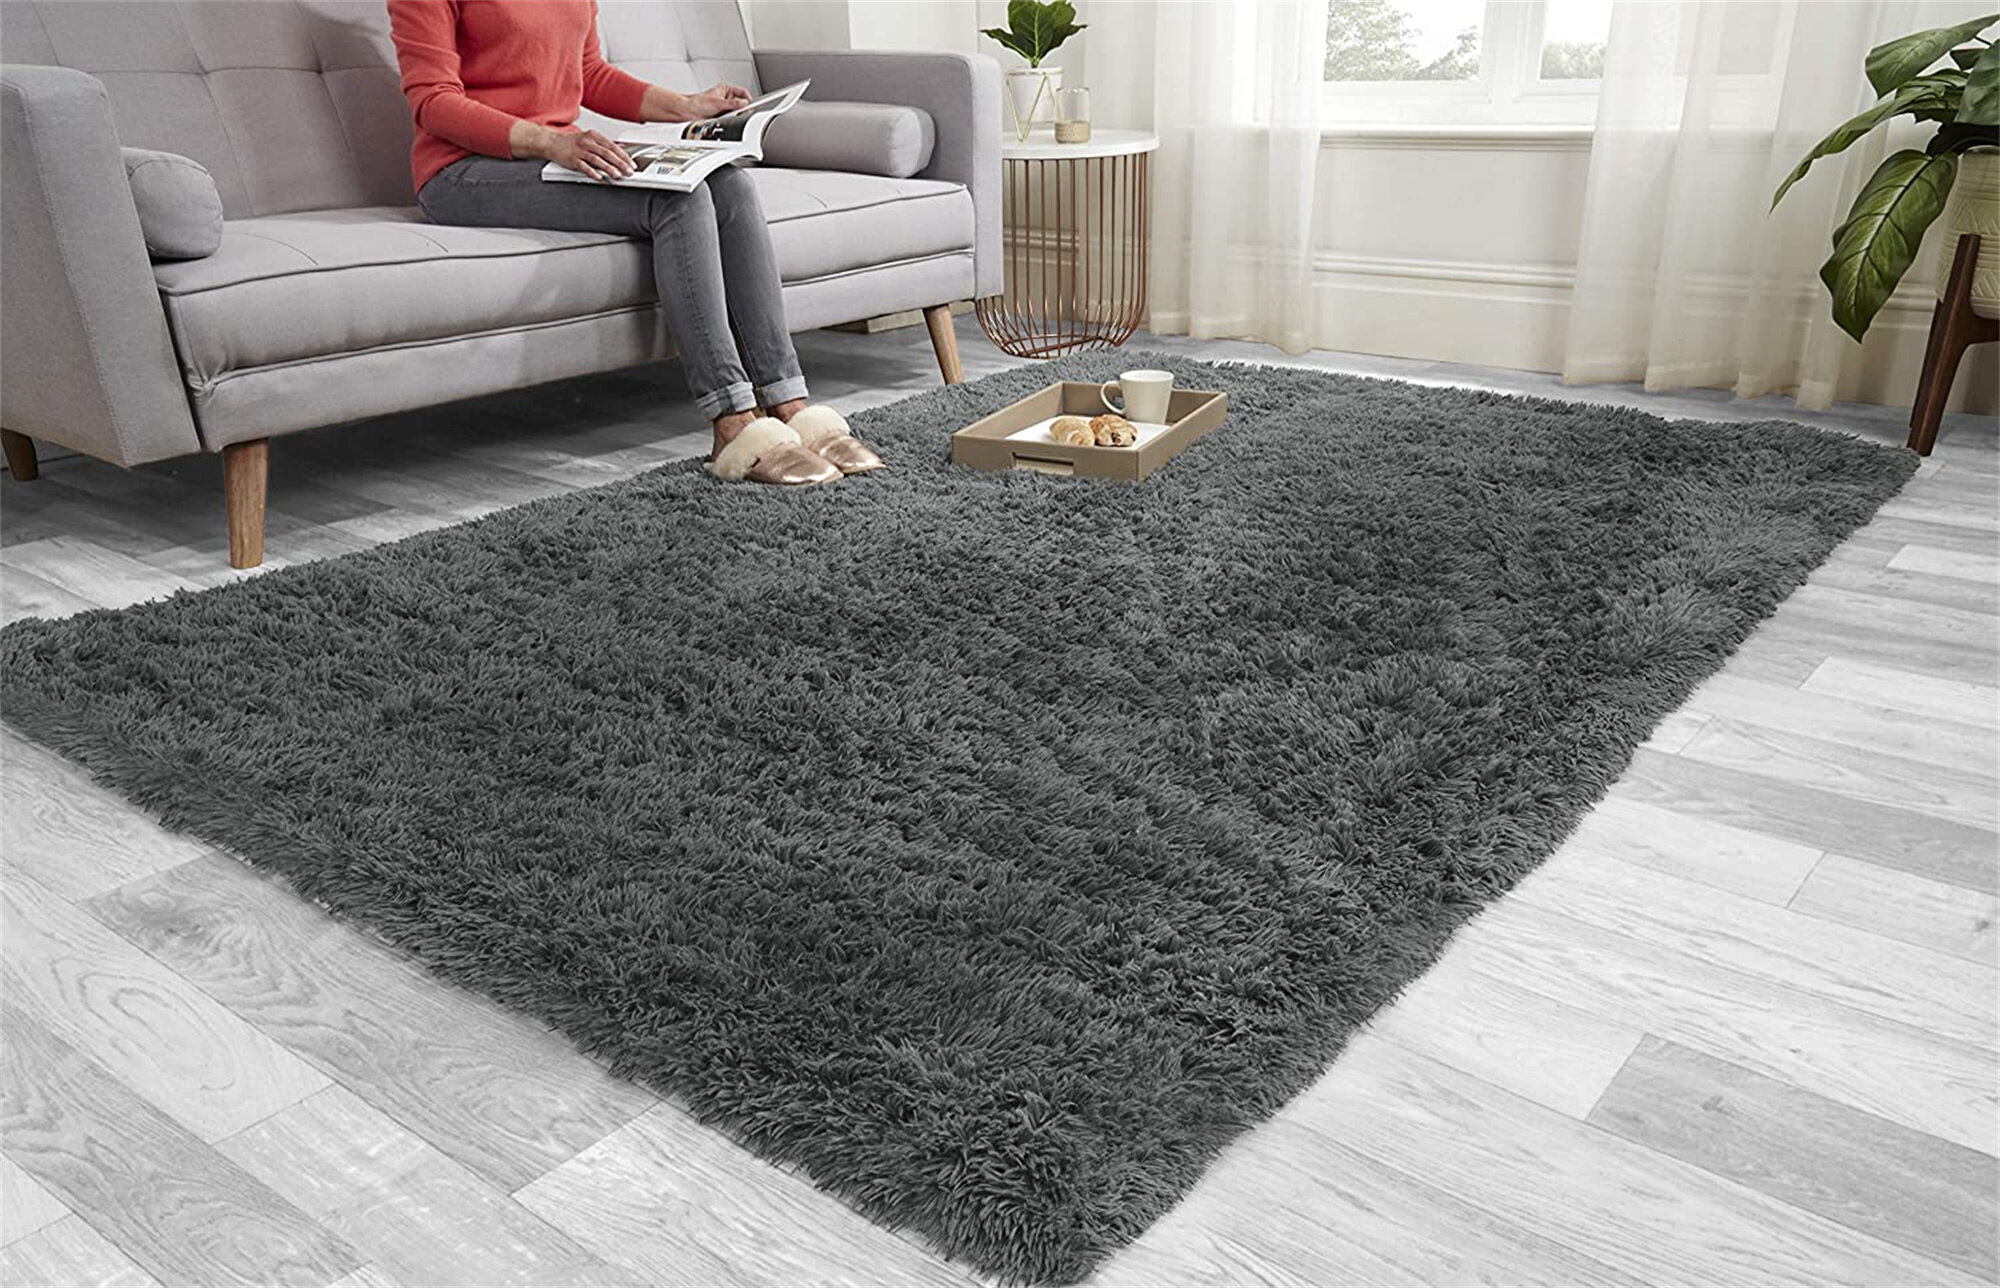 super soft fluffy shaggy rug anti-slip carpet mat living room large area  rugs modern floor bedroom extra large size non shedding grey, 160cm x 230cm